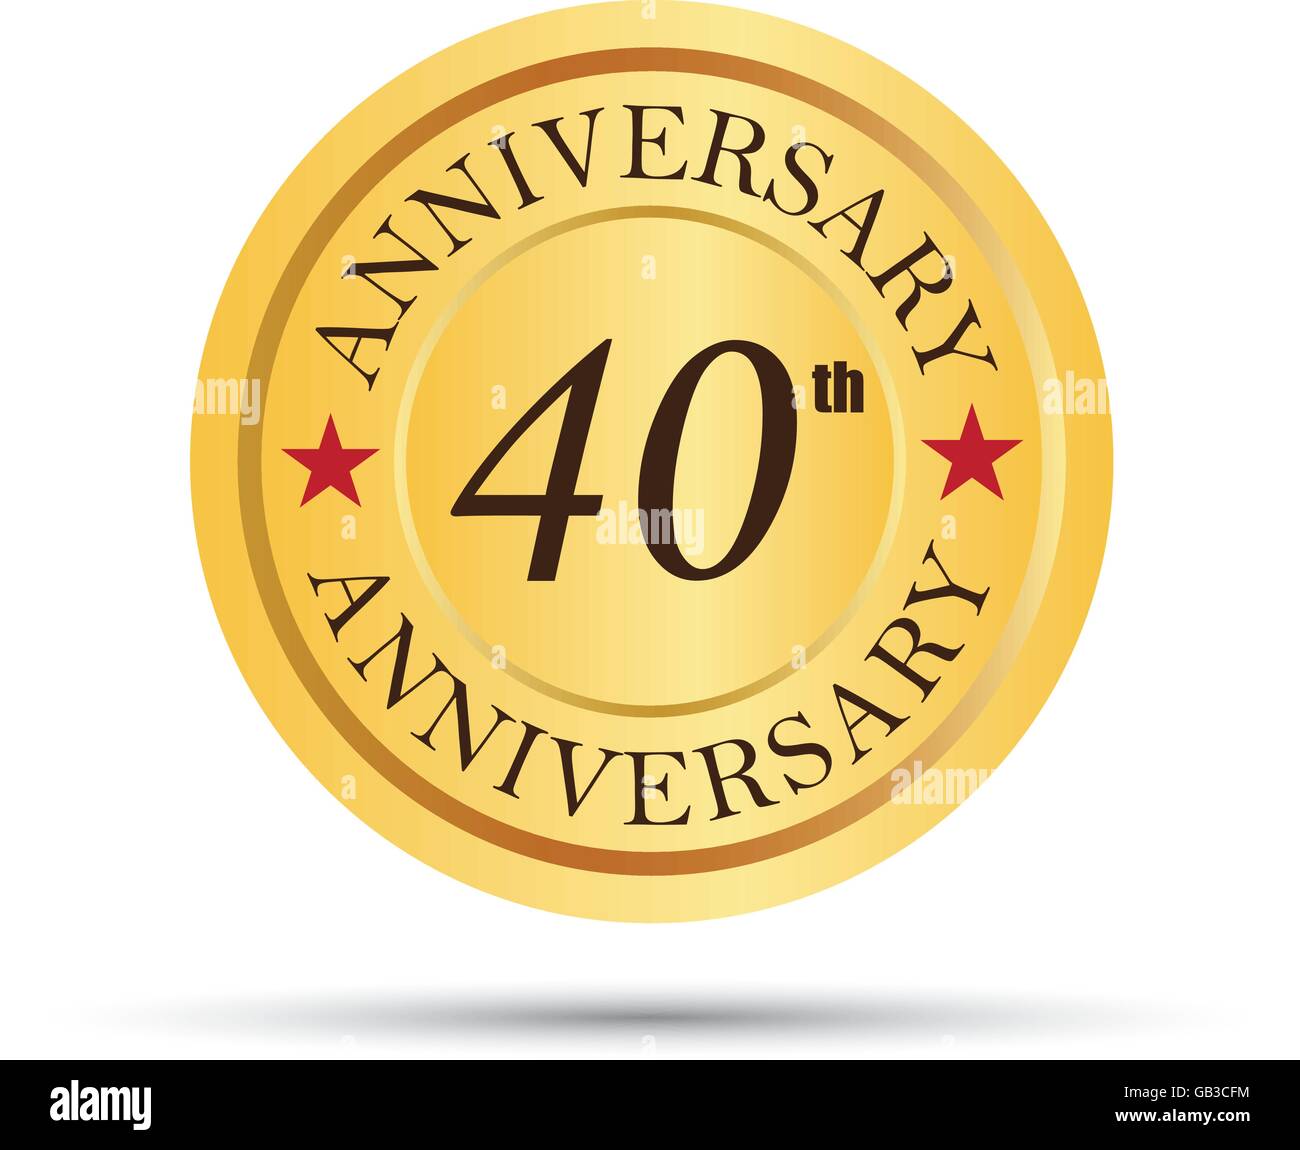 Nick 40 Years Logo by IAmAutism on DeviantArt